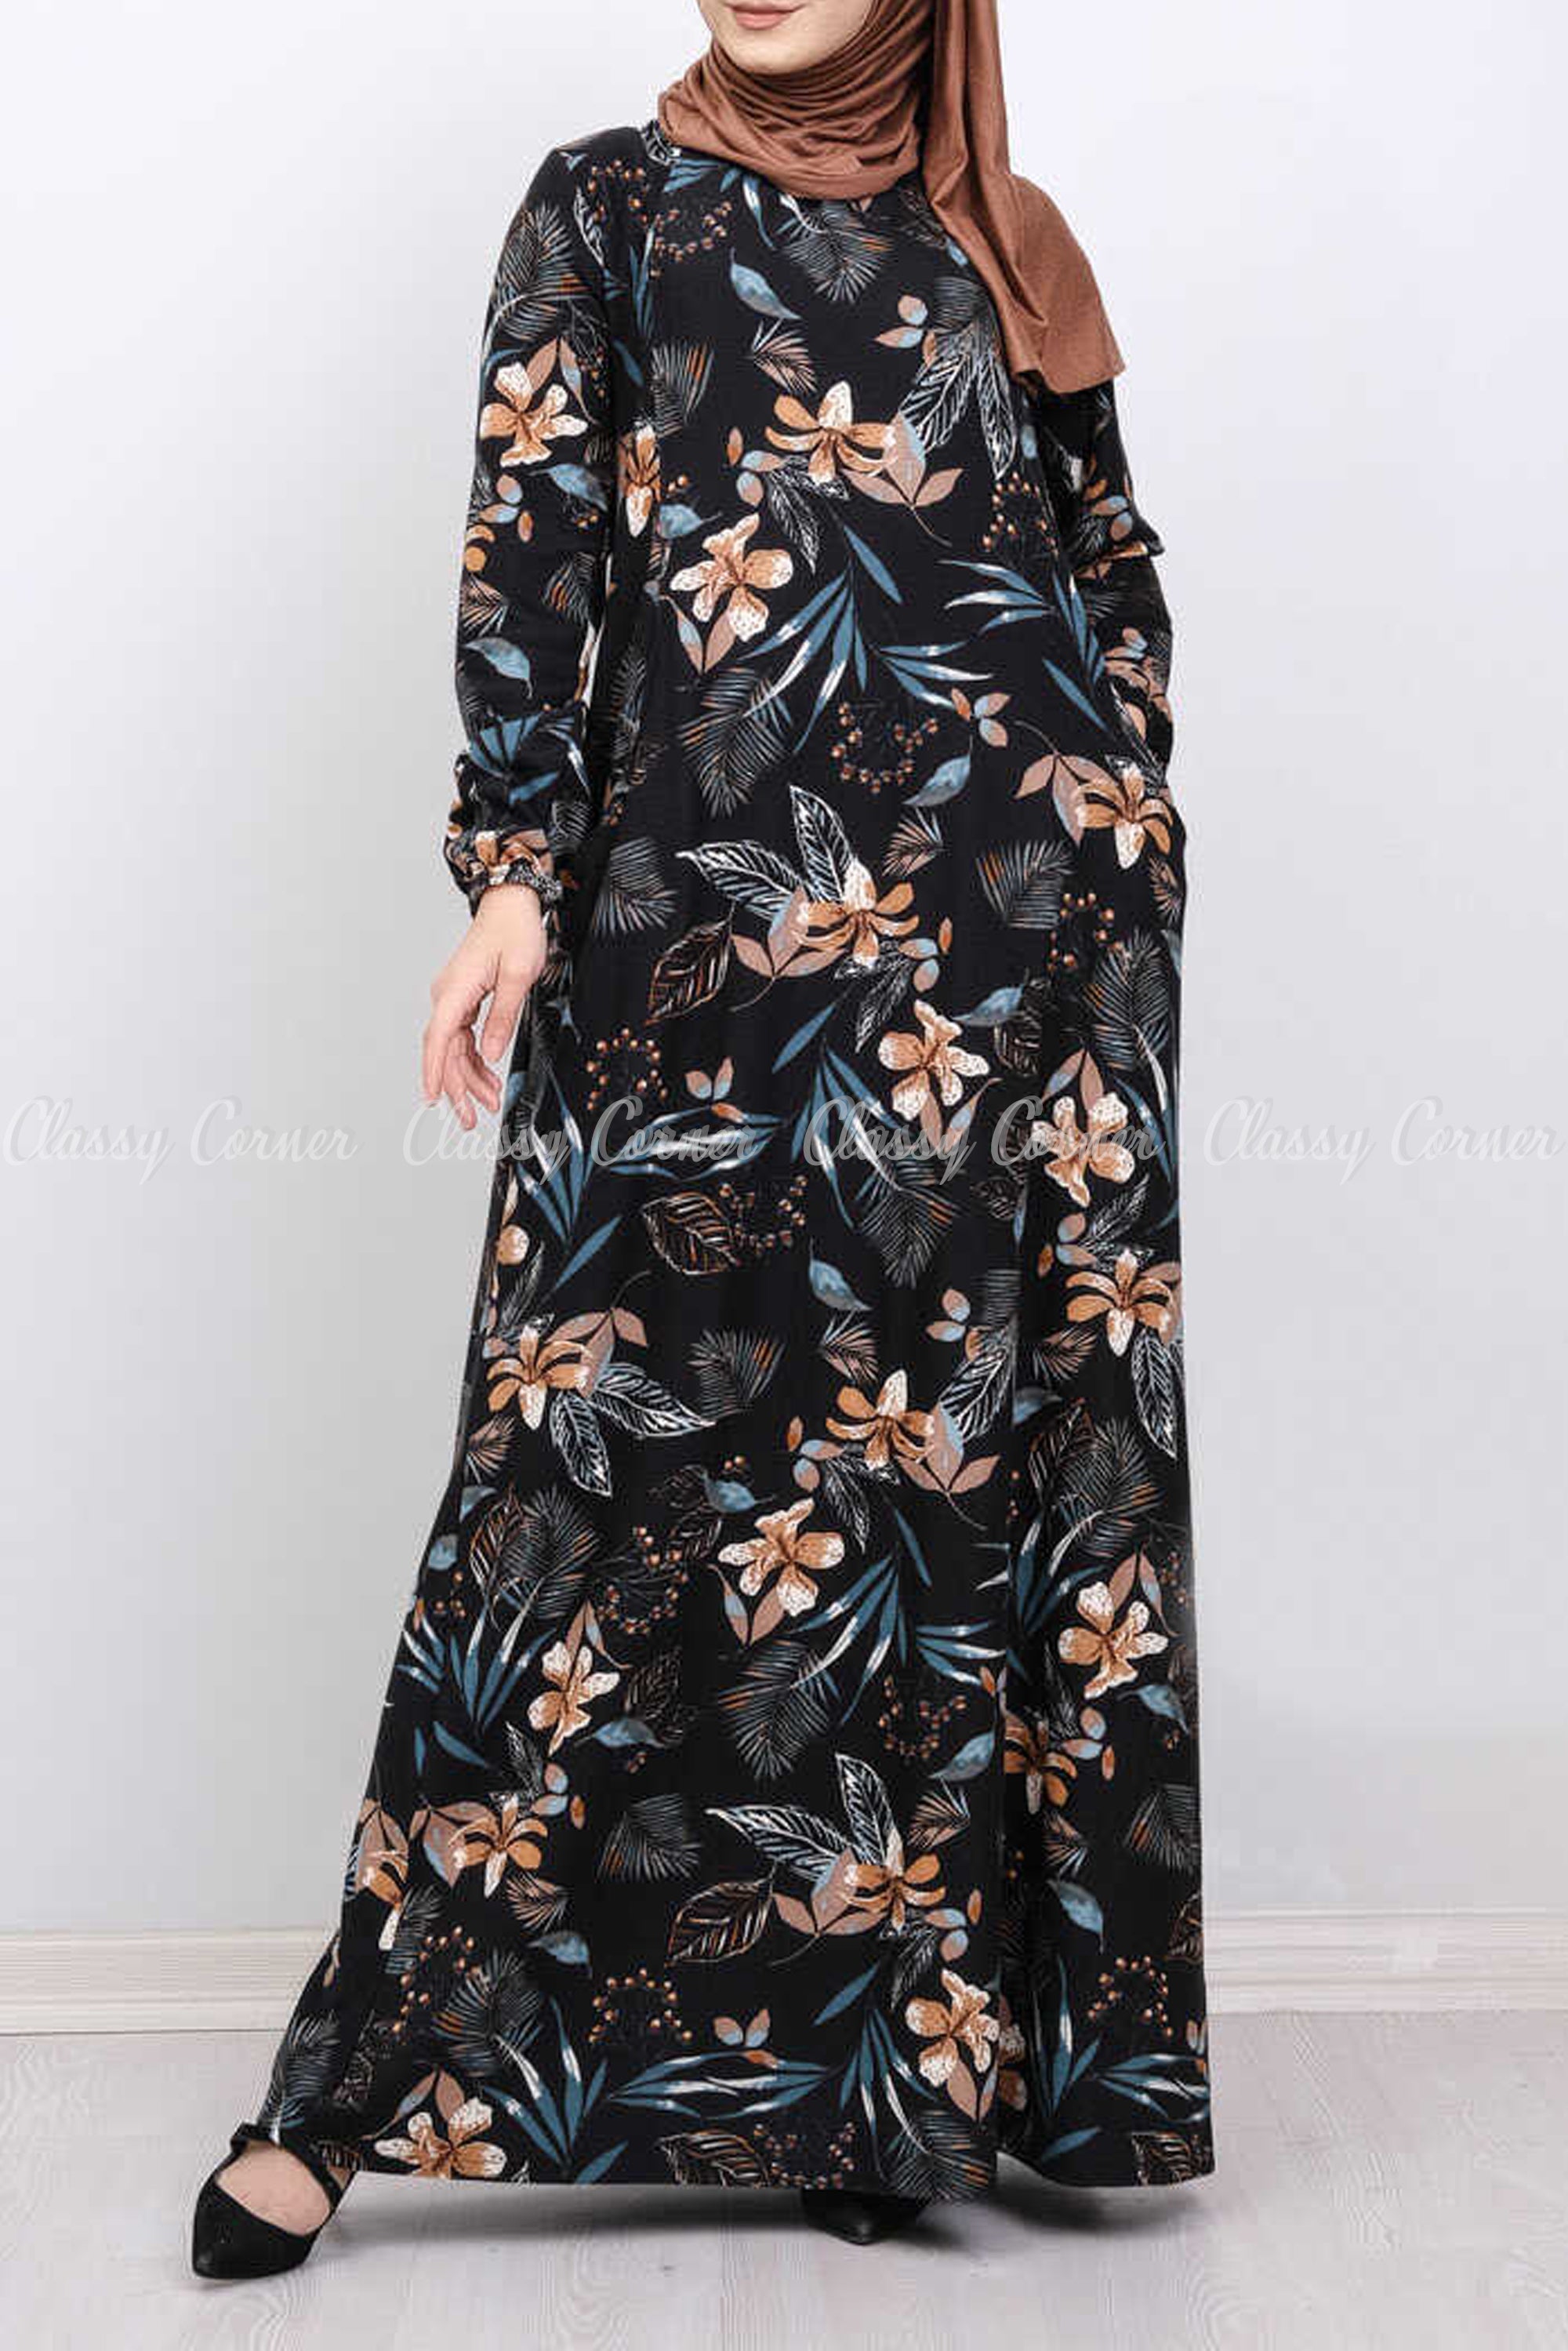 Beige Floral Hawaiian Print Black Modest Long Dress - Classy Corner